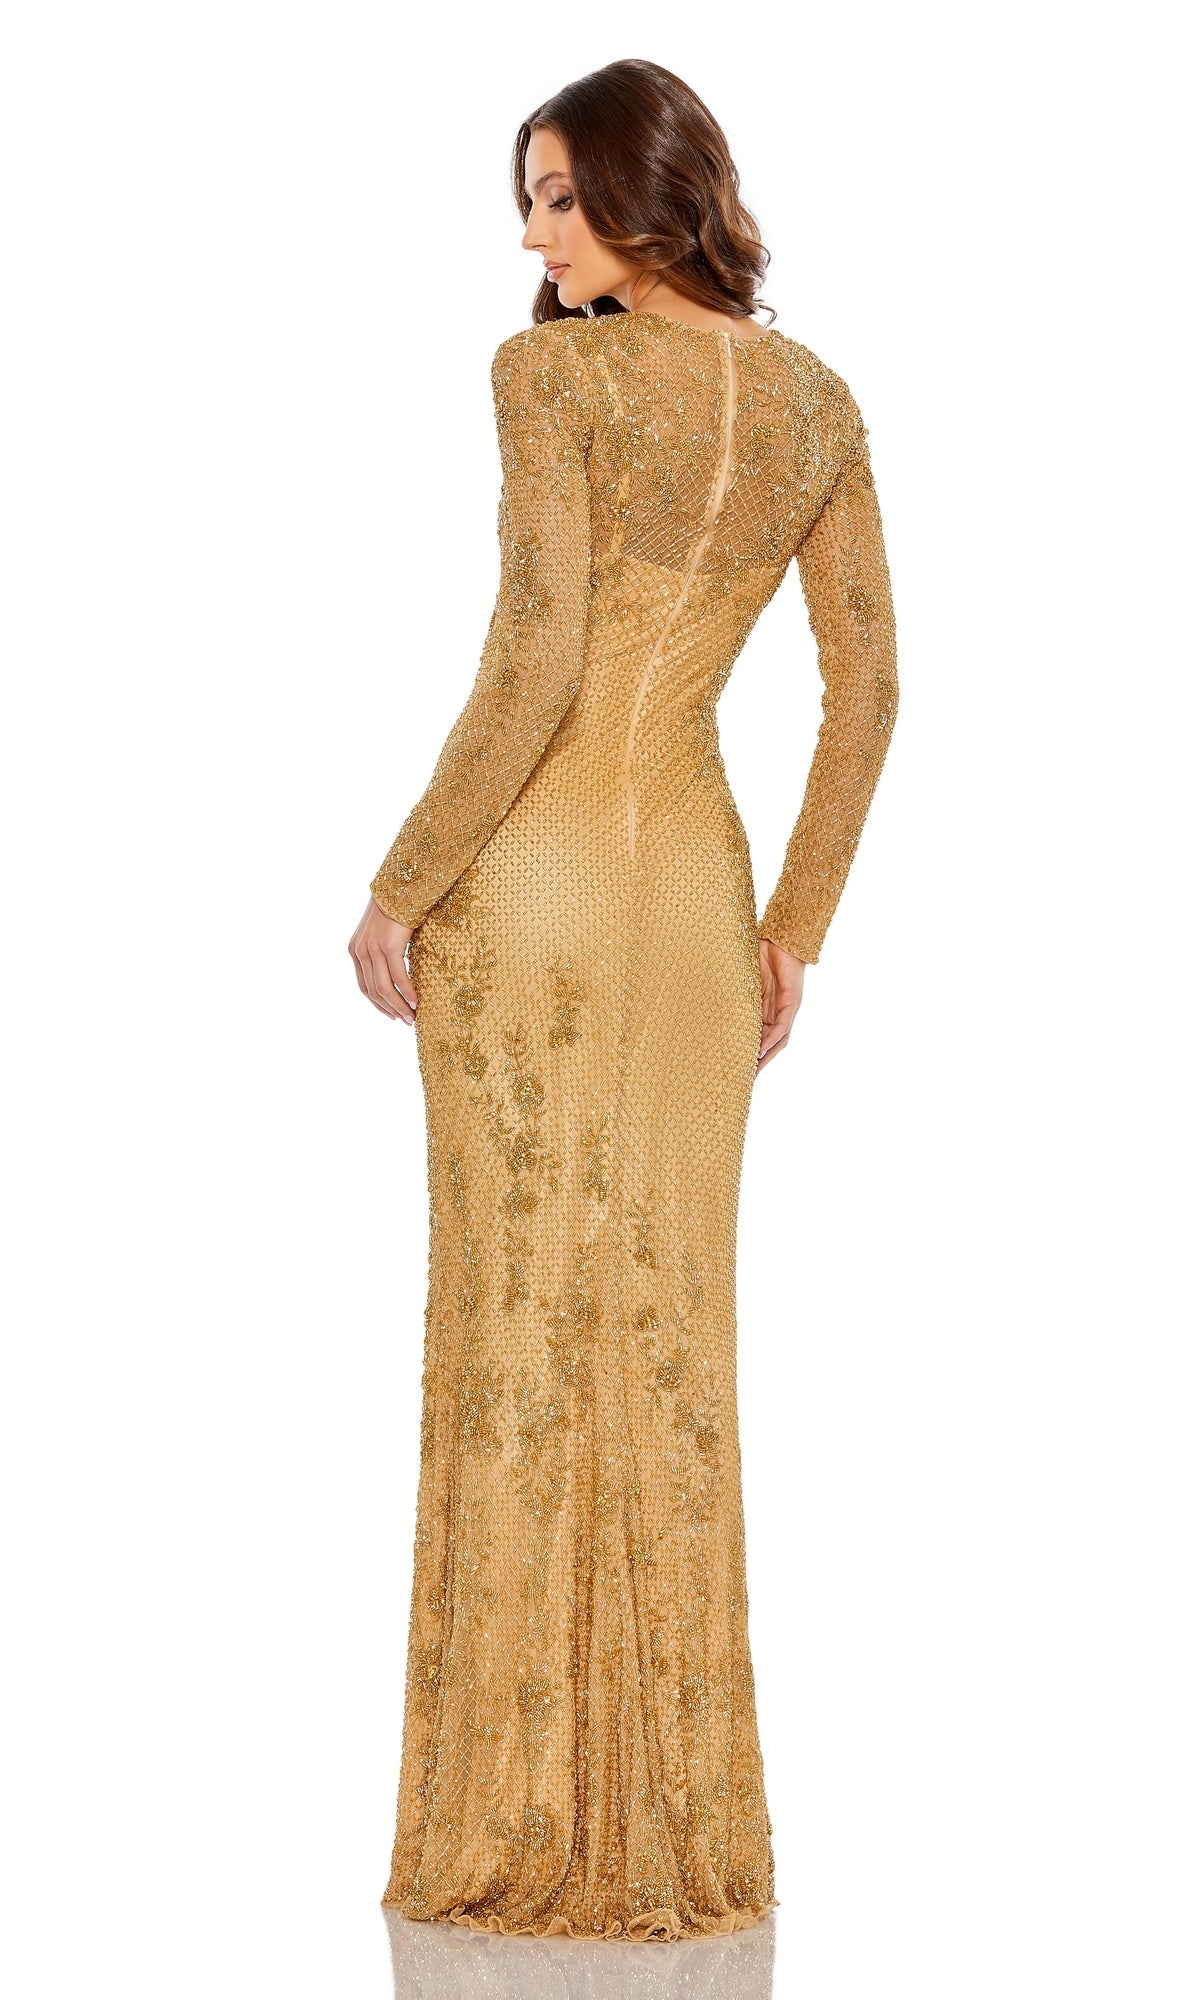 Long Formal Dress 5504 by Mac Duggal